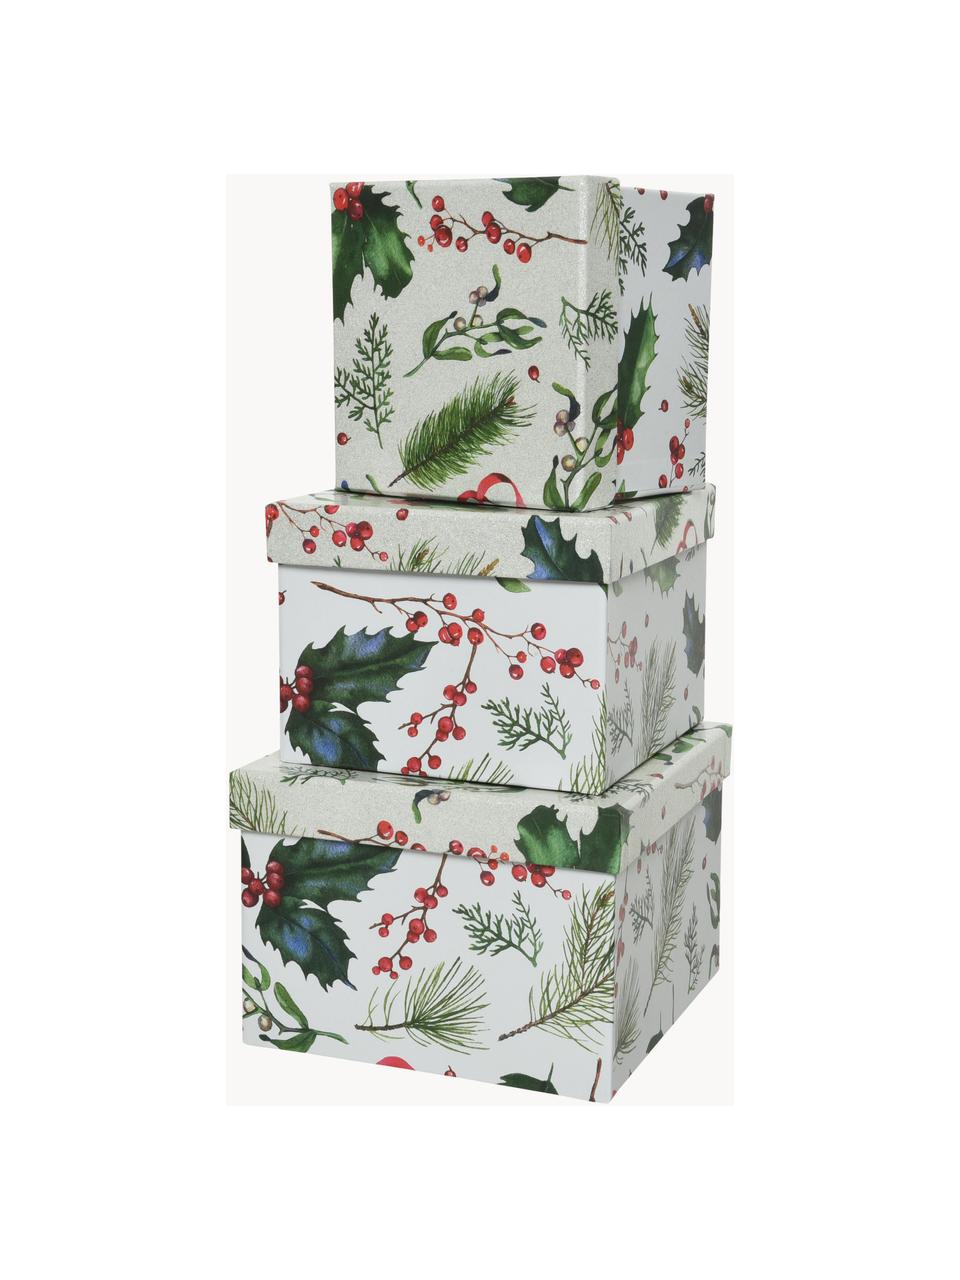 Sada dárkových krabic Mistletoe, 3 díly, Papír, Bílá, zelená, červená, Sada s různými velikostmi